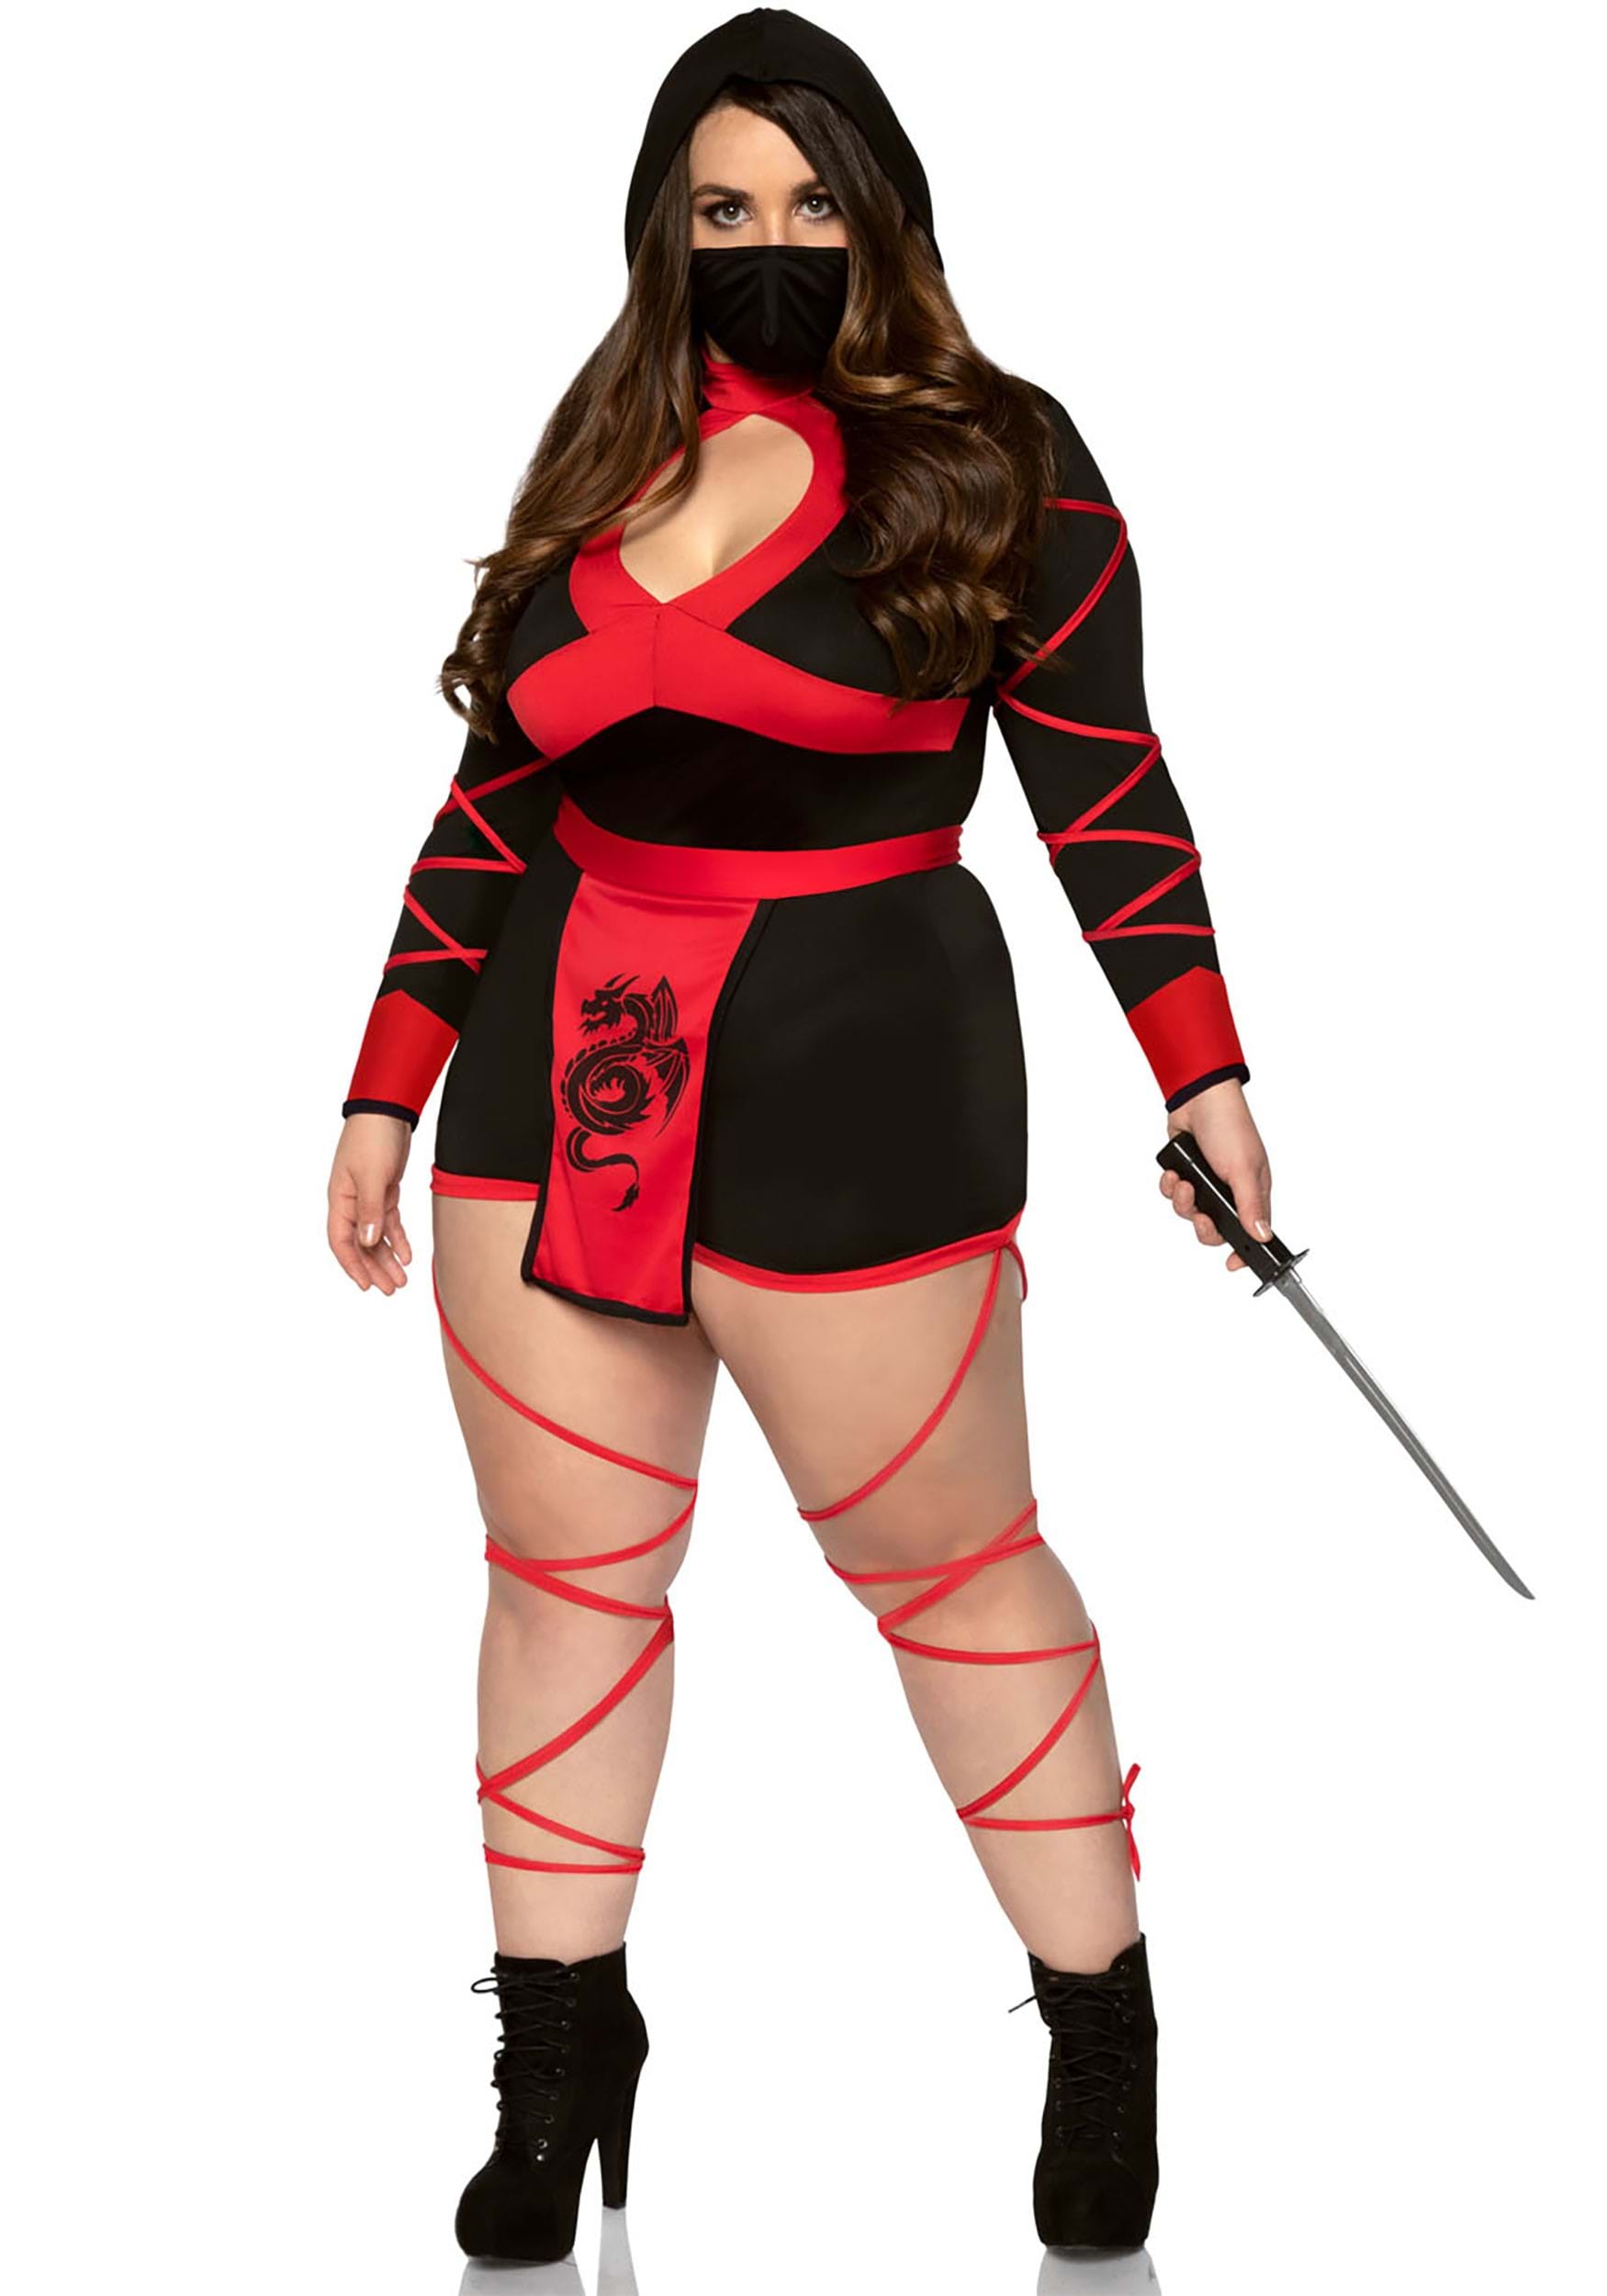 Photos - Fancy Dress MKW Leg Avenue Plus Size Dragon Ninja Costume for Women Black/Red LE85401X 